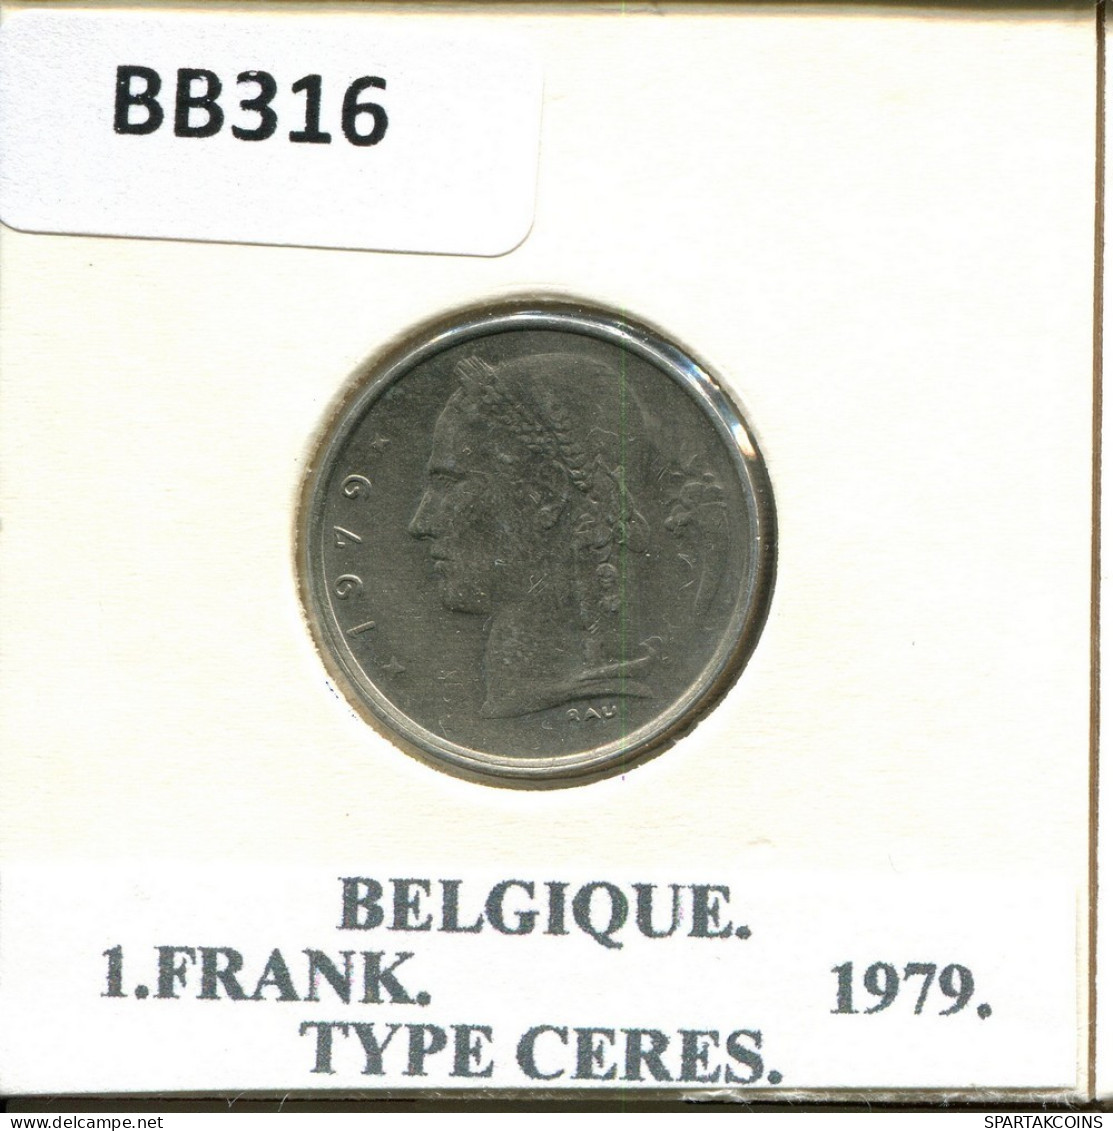 1 FRANC 1979 FRENCH Text BELGIUM Coin #BB316.U.A - 1 Franc